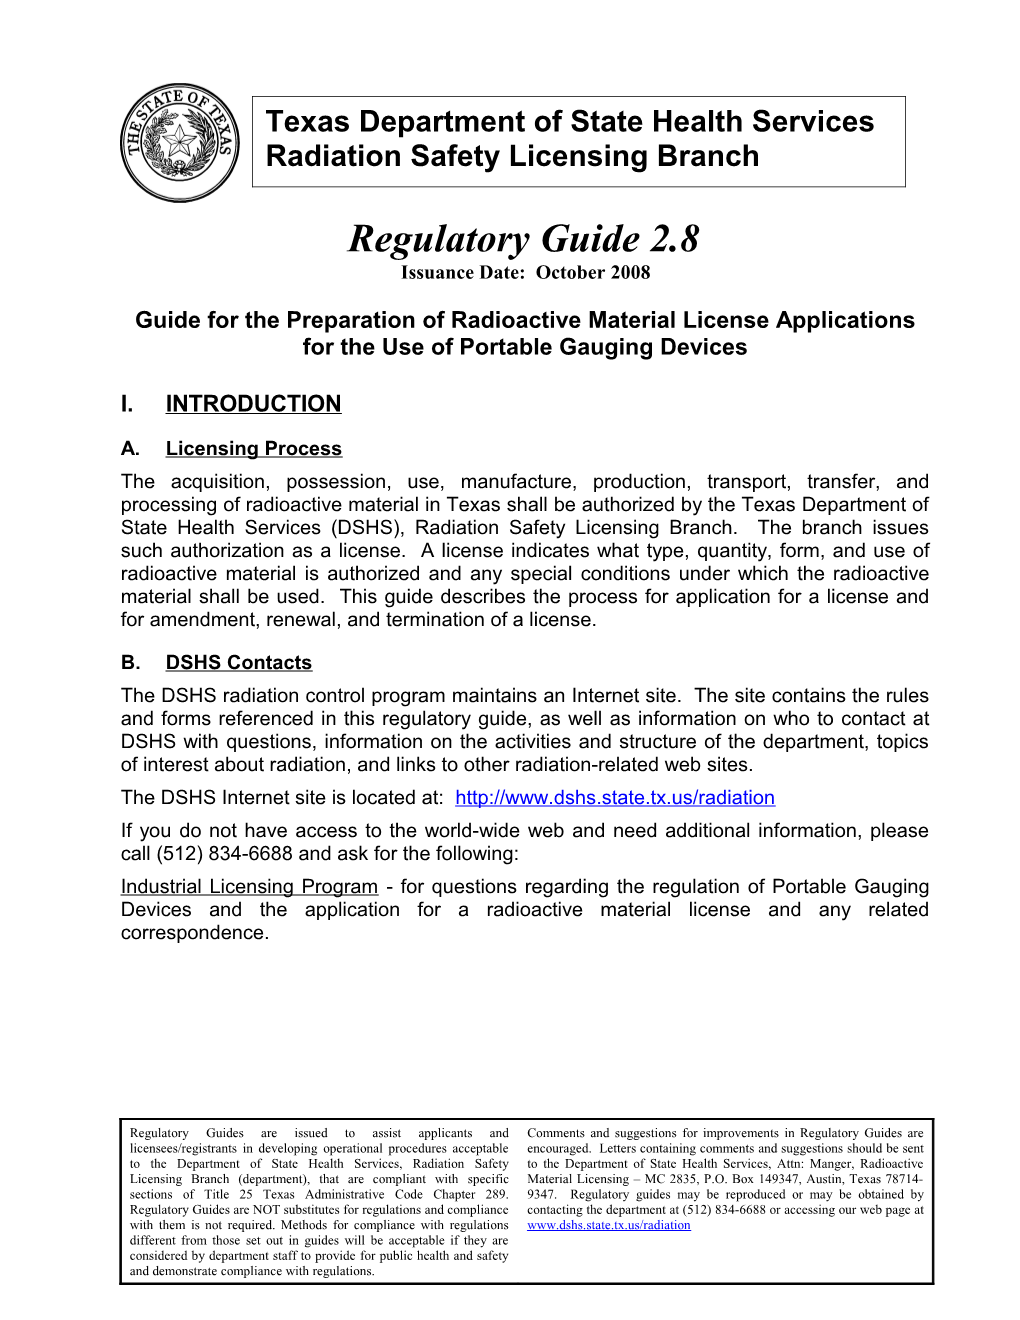 Texas Radiation Safety Licensing Branchregulatory Guide 2.8Portable Gauge License Application